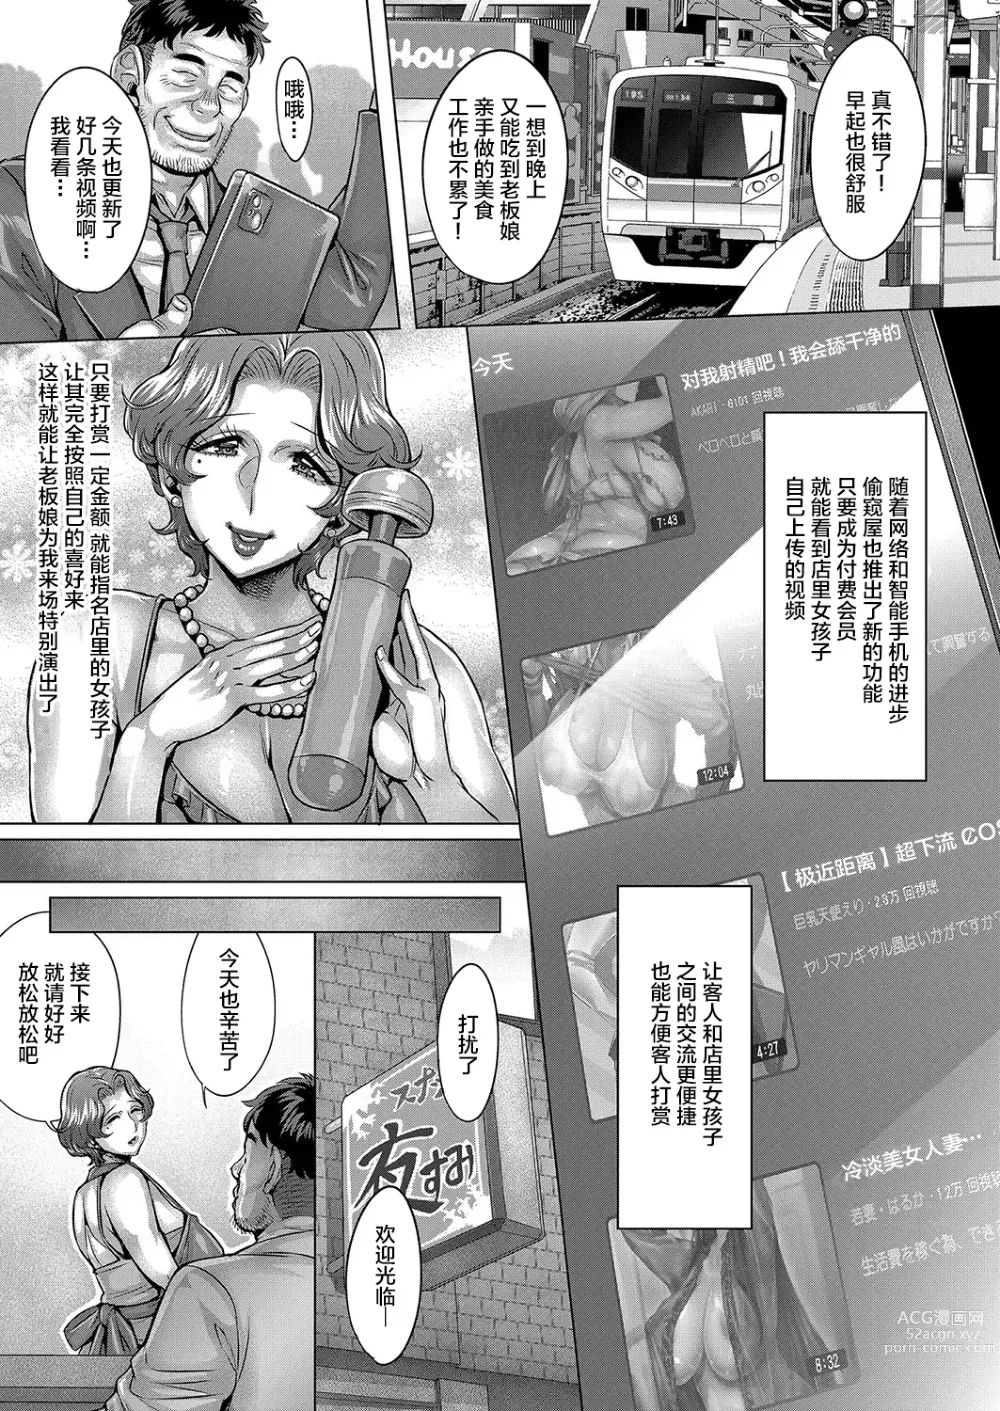 Page 7 of manga Inbo Pet No Kaikata